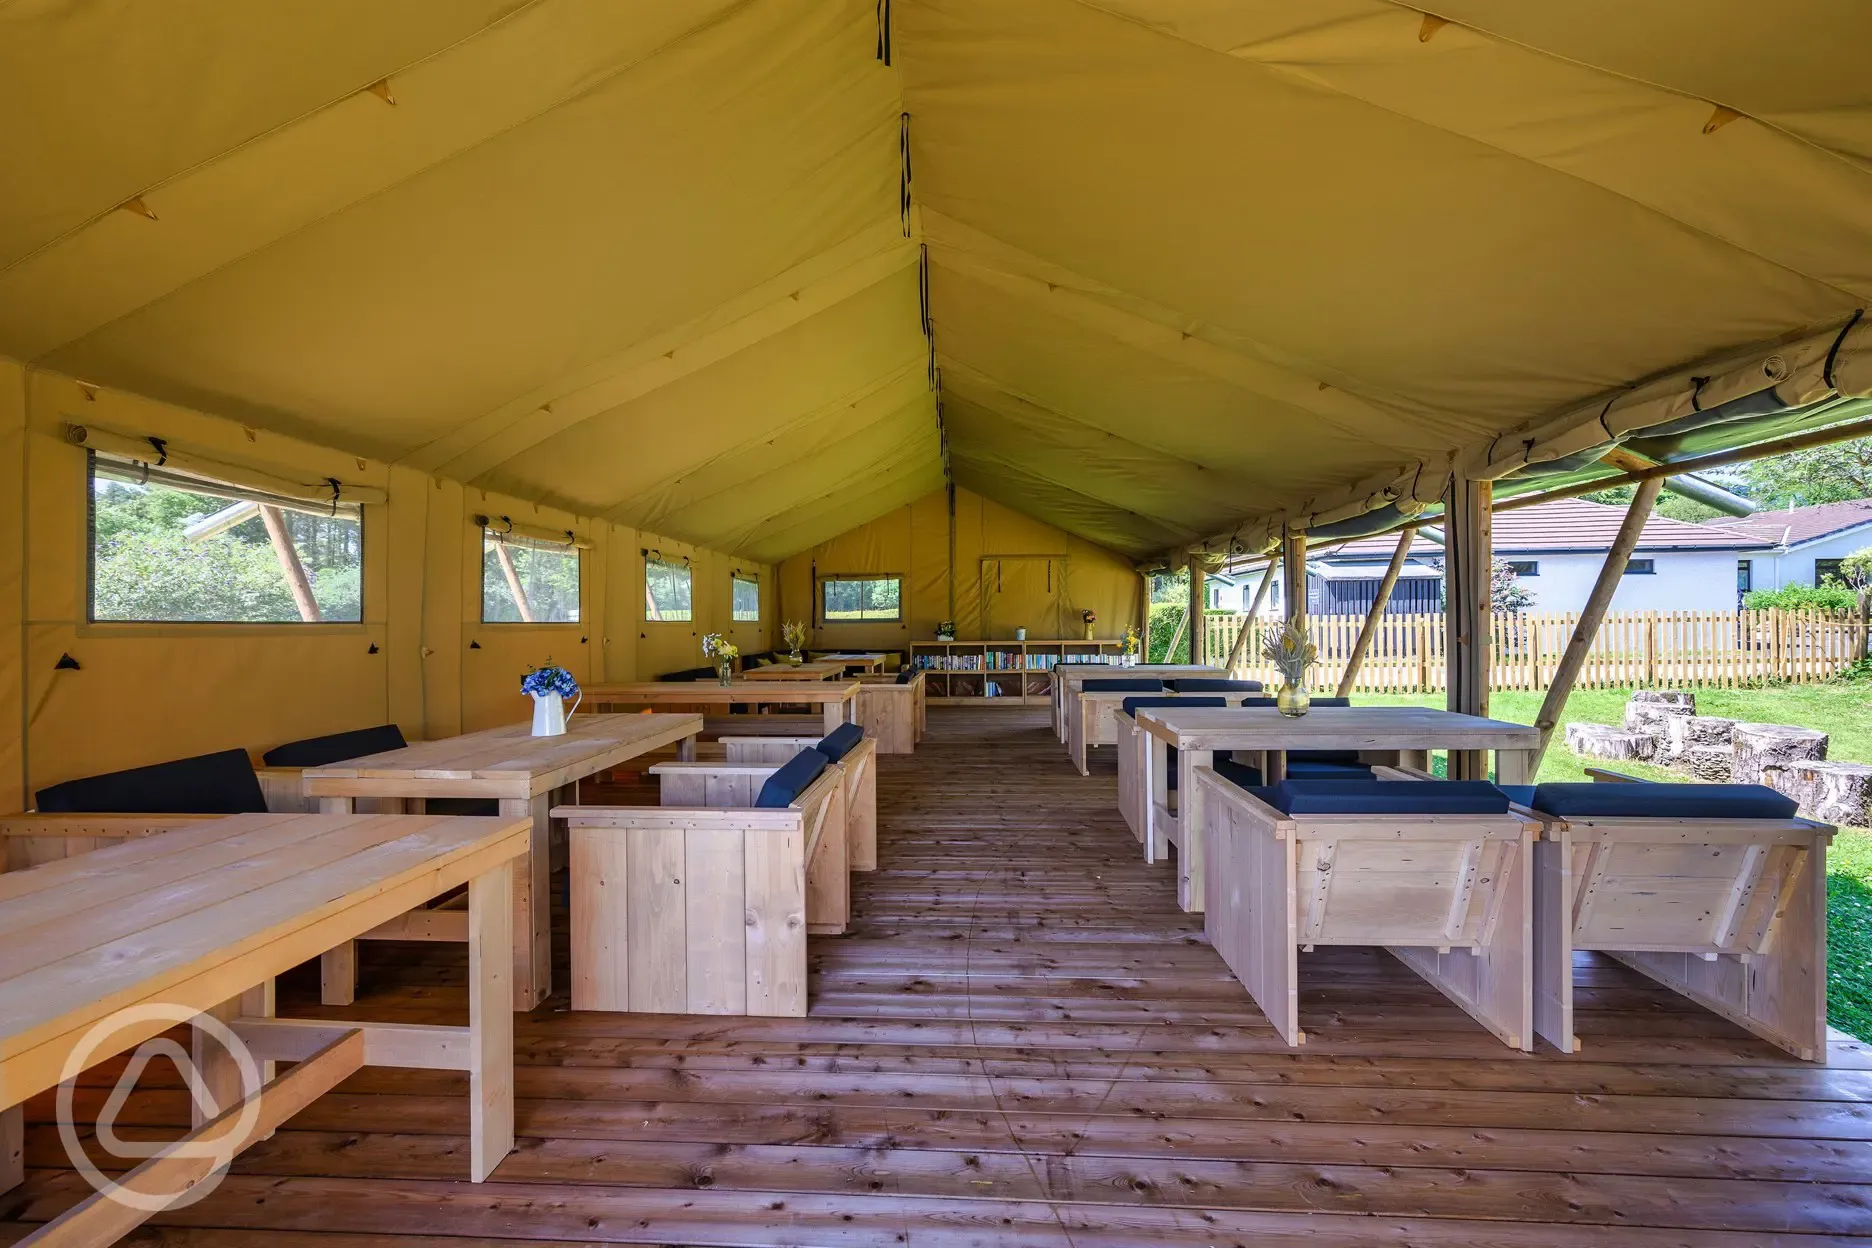 Communal safari dining tent